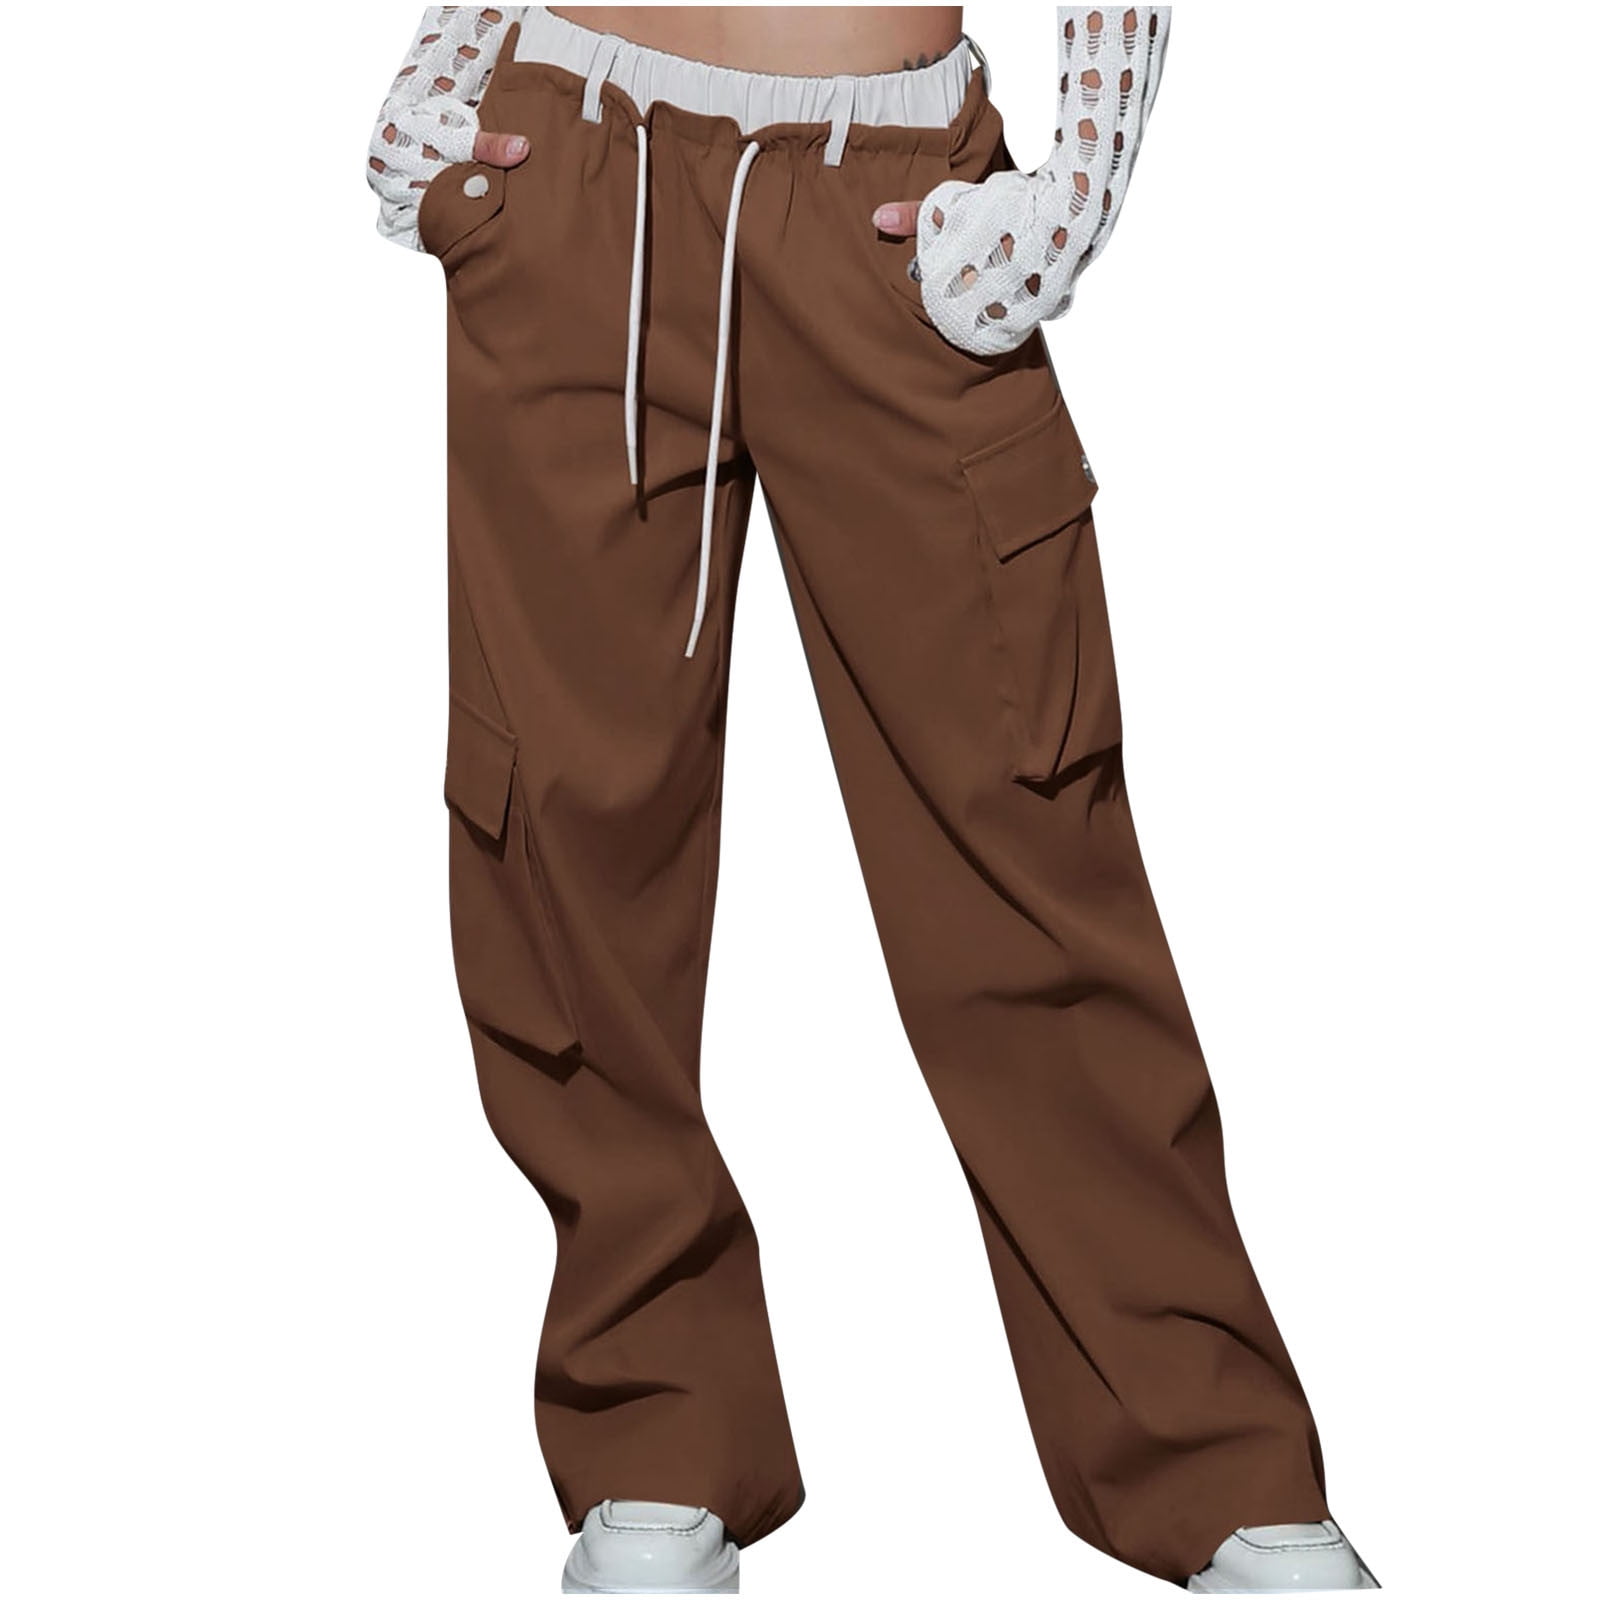 Mrat Cargo Pants For Women Full Length Pants Ladies Street Style